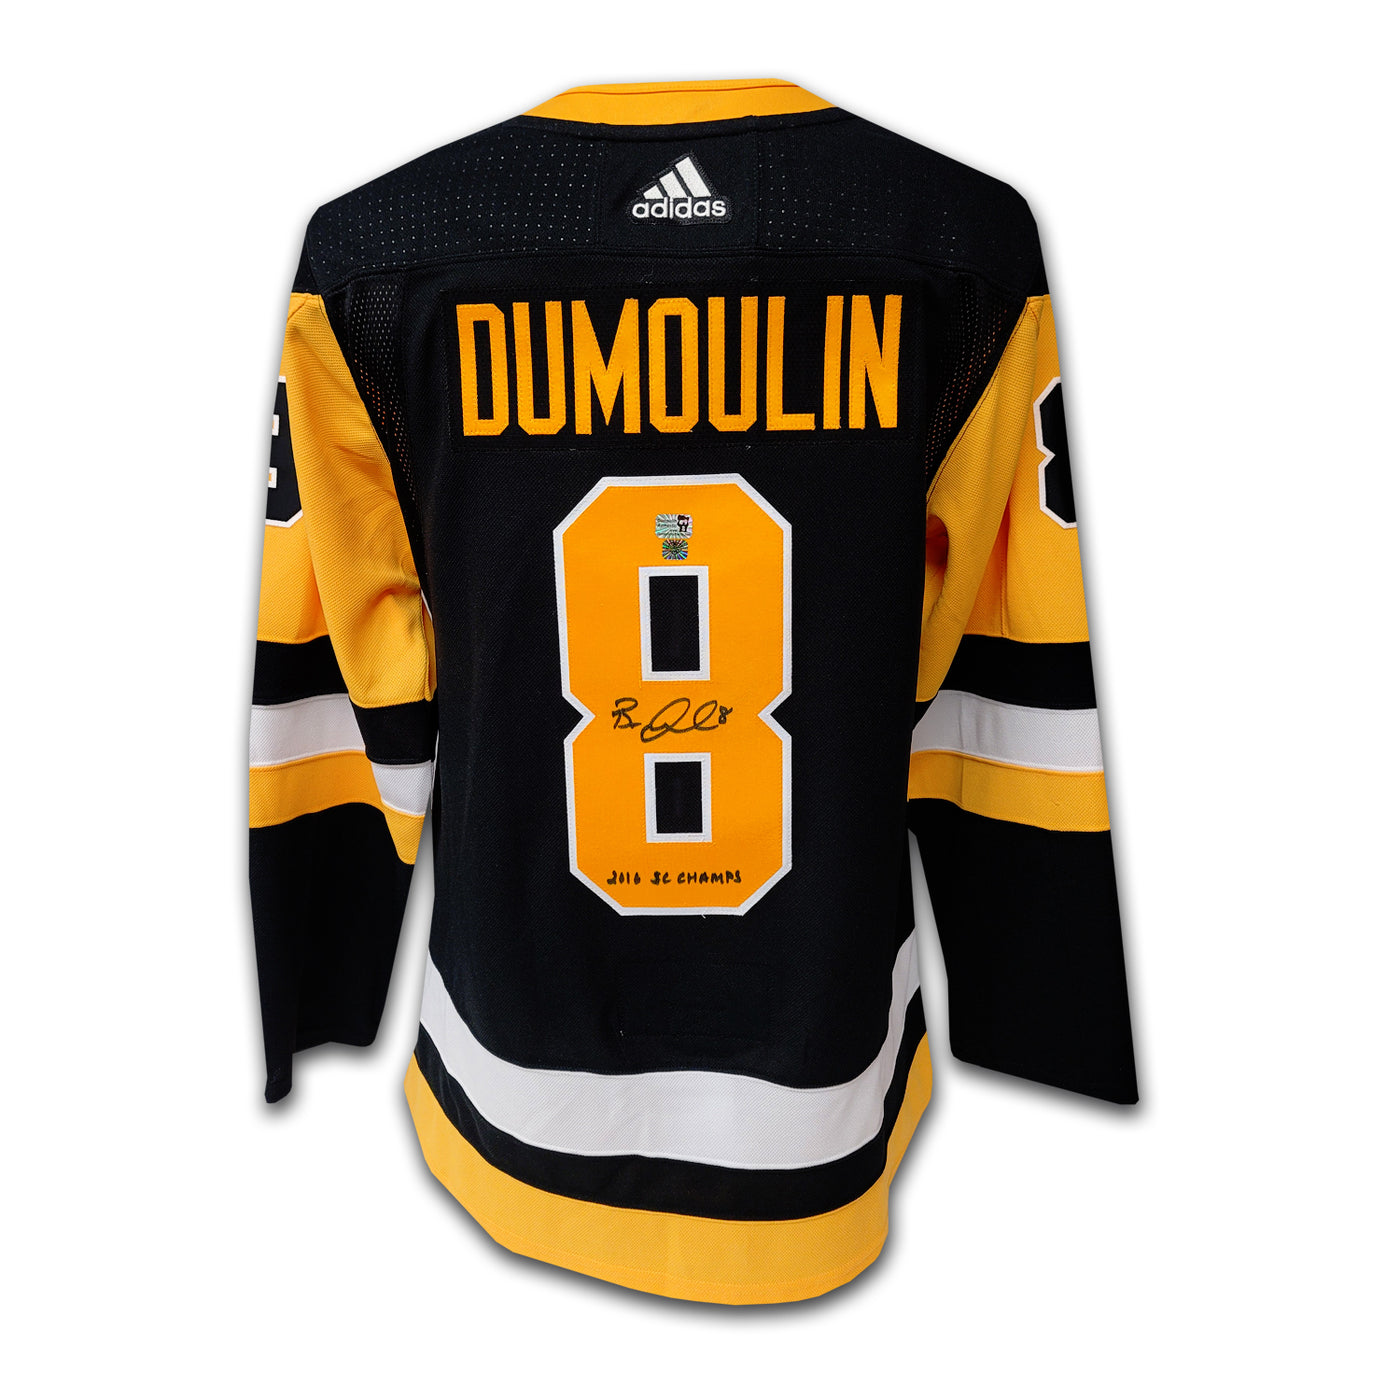 Brian Dumoulin Pittsburgh Penguins Black Adidas Jersey Inscribed 2016 SC